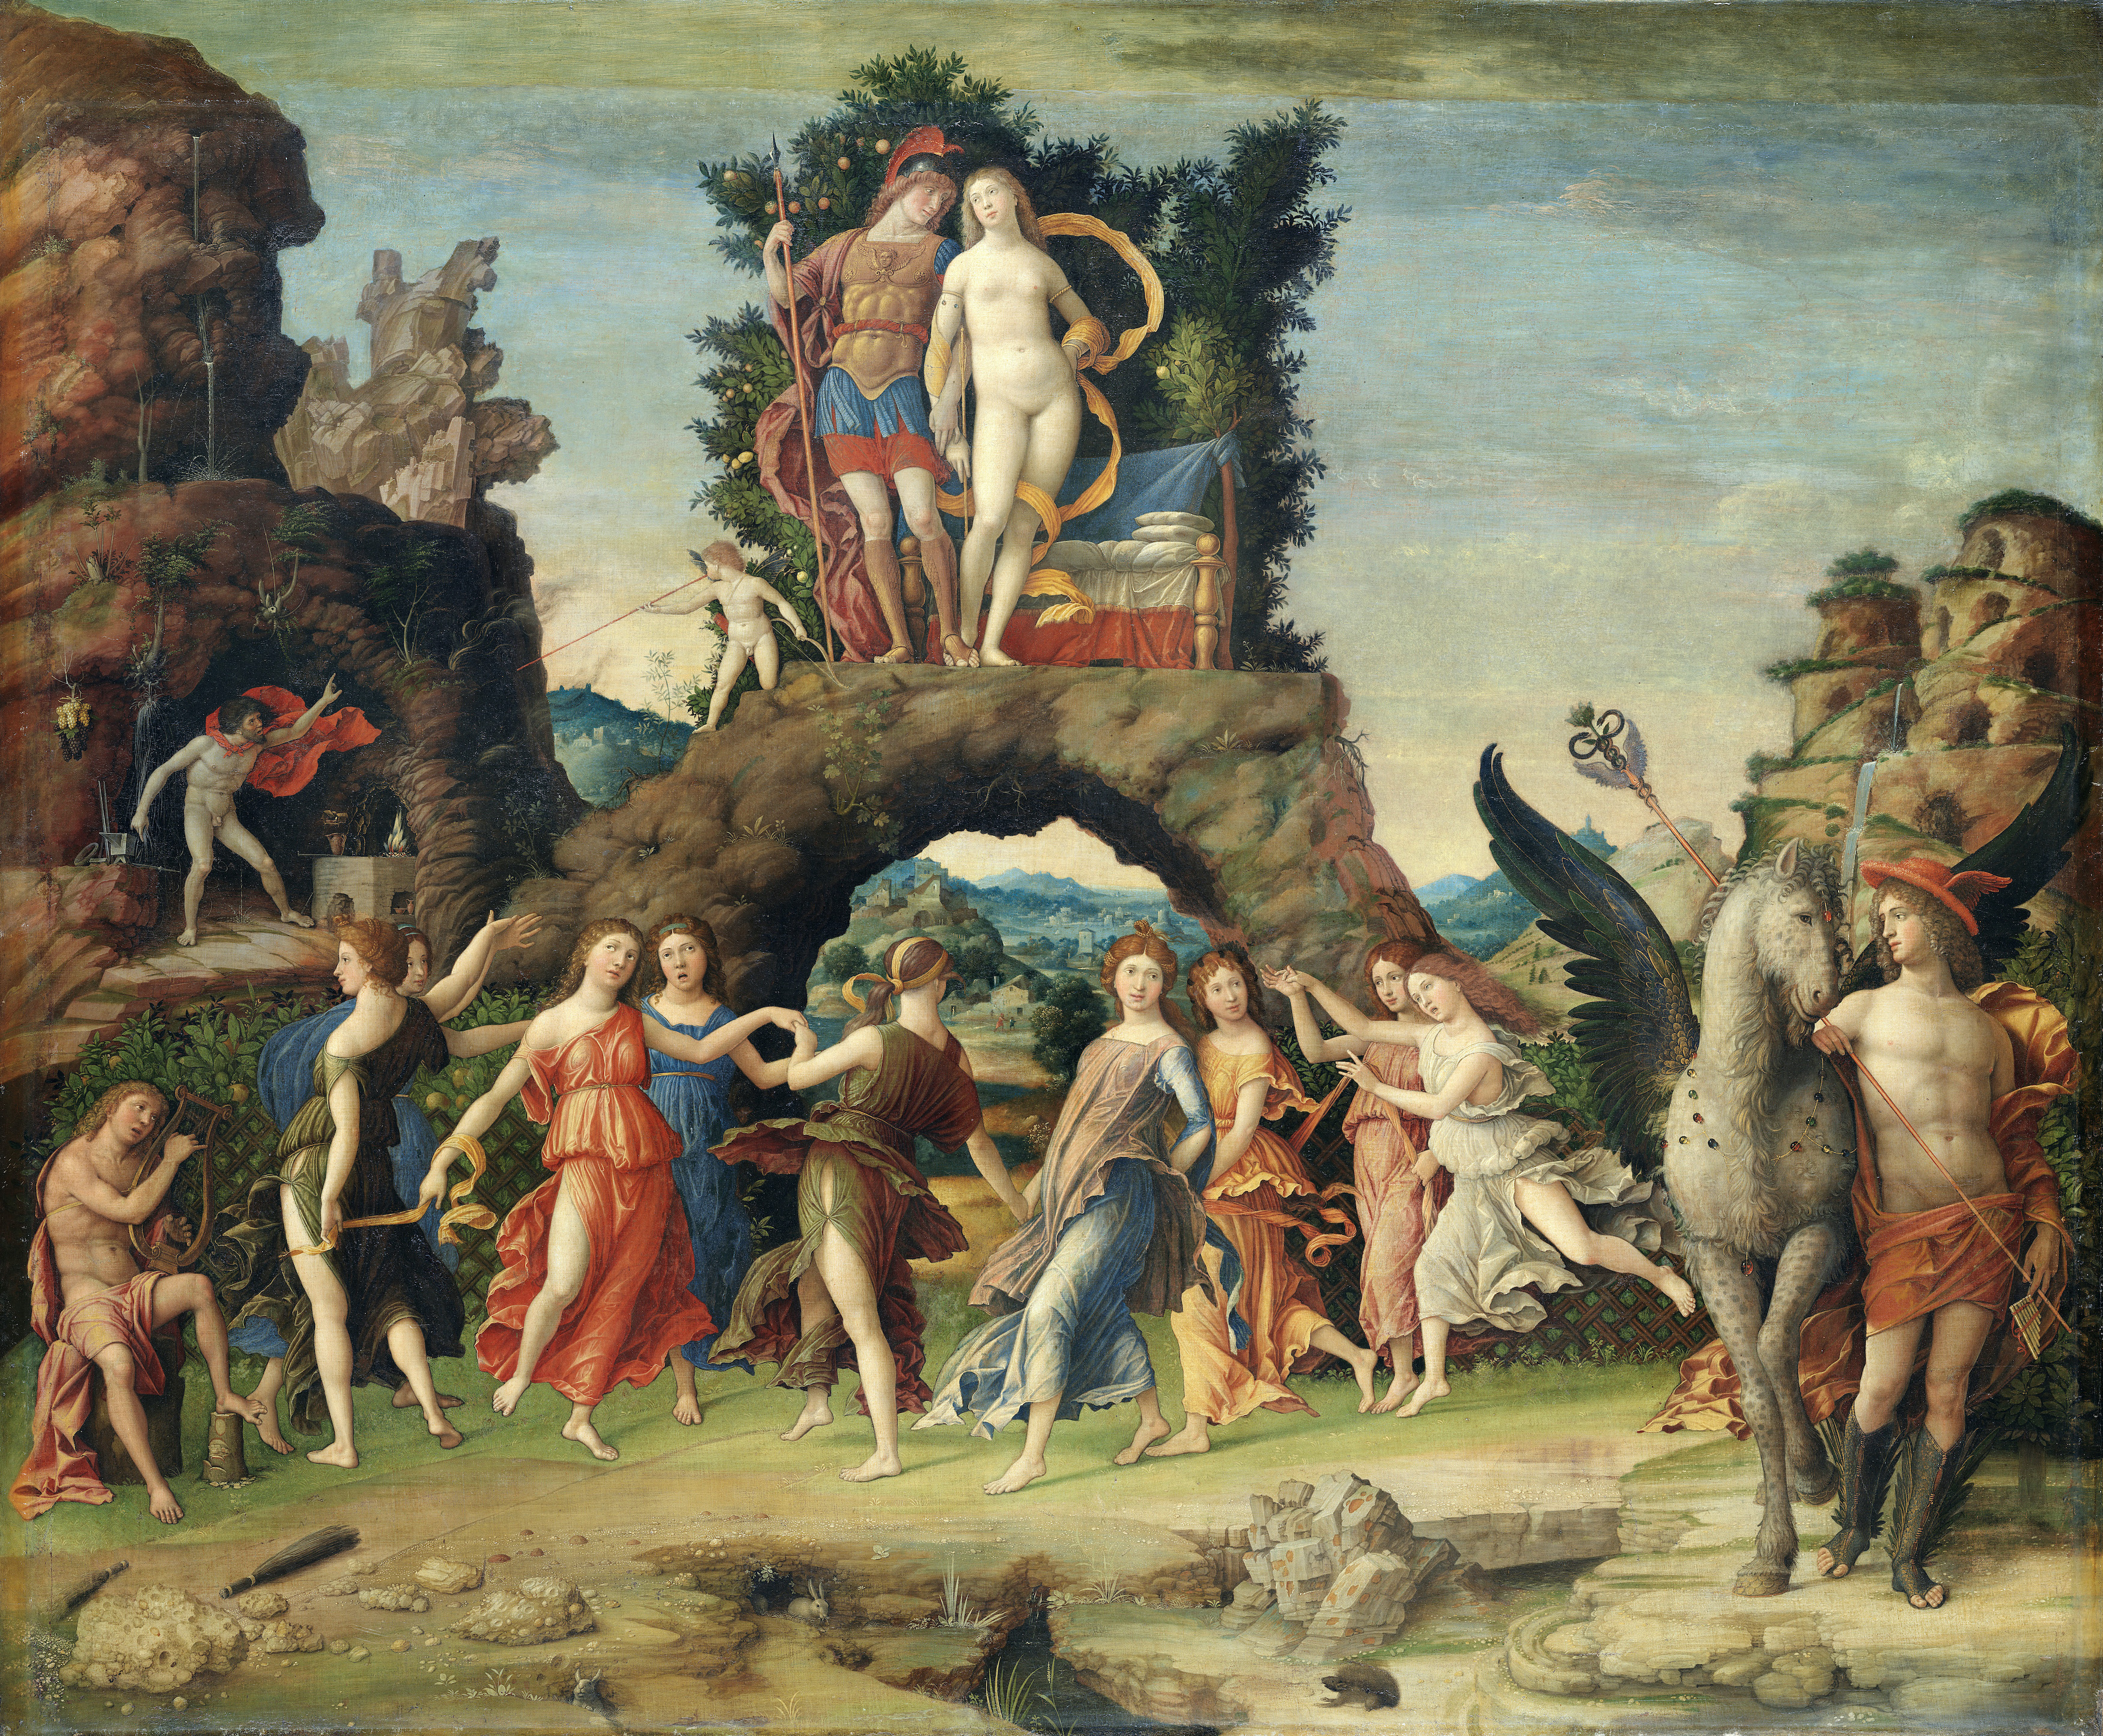 Parnas by Andrea Mantegna - 1497 - 159 × 192 cm 